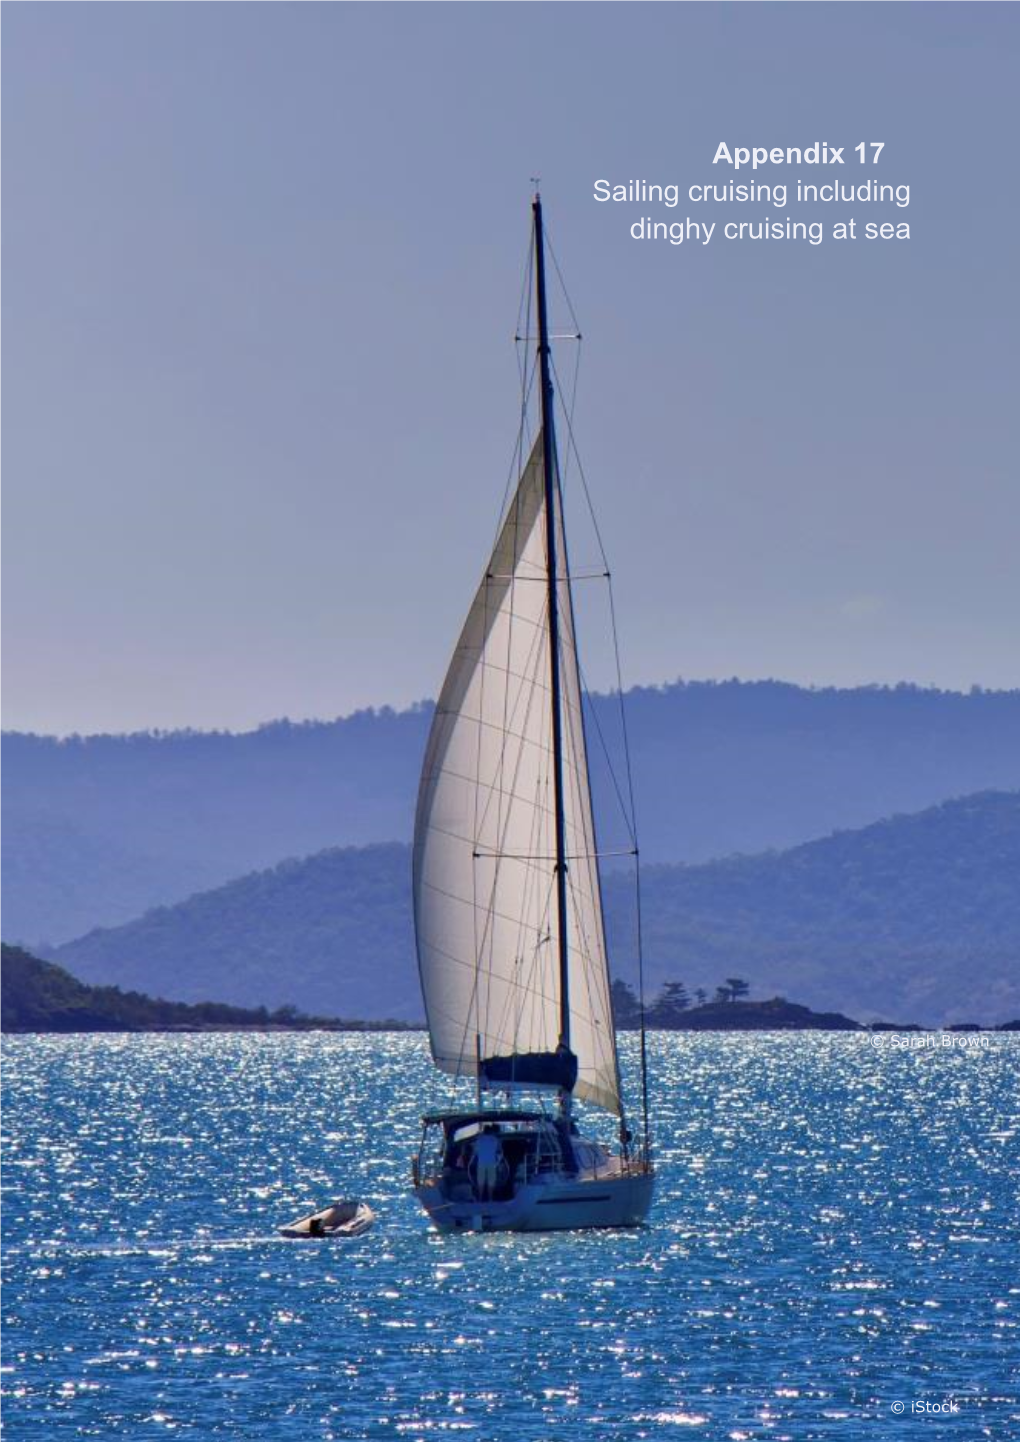 Sailing Cruising Including Dinghy Cruising at Sea